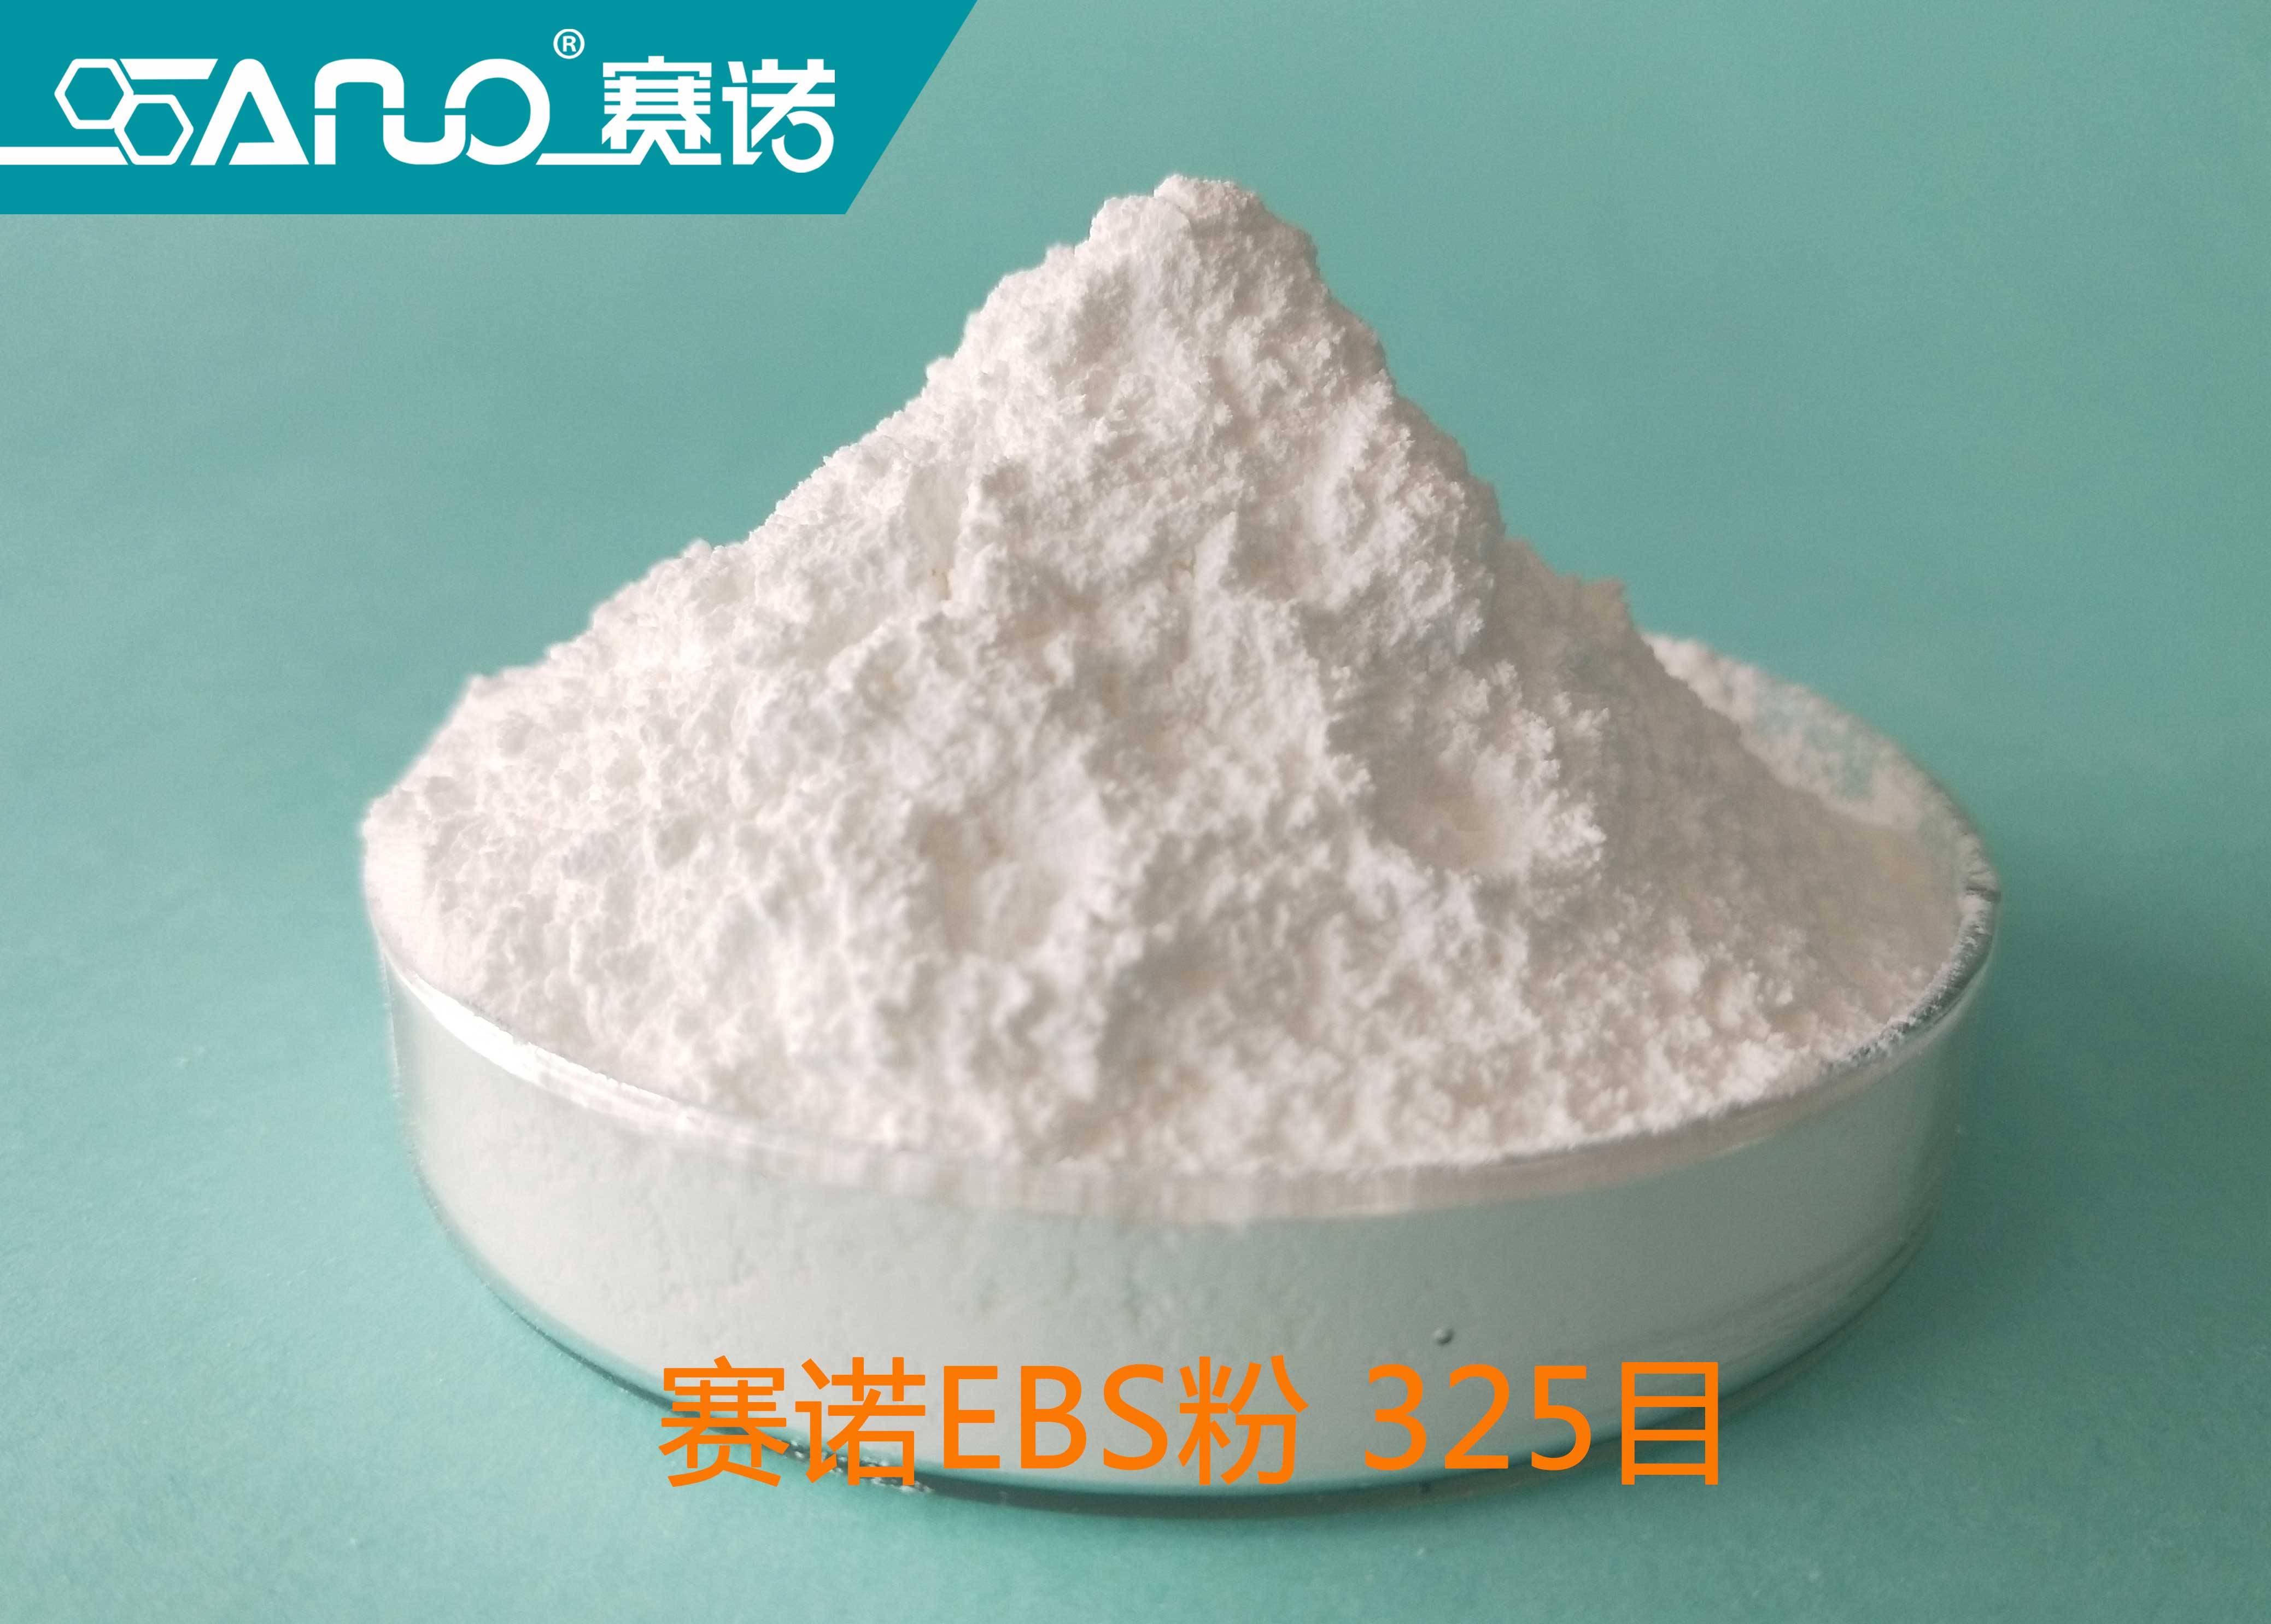 Mahahalagang additives—Ethylene Bisstearamide